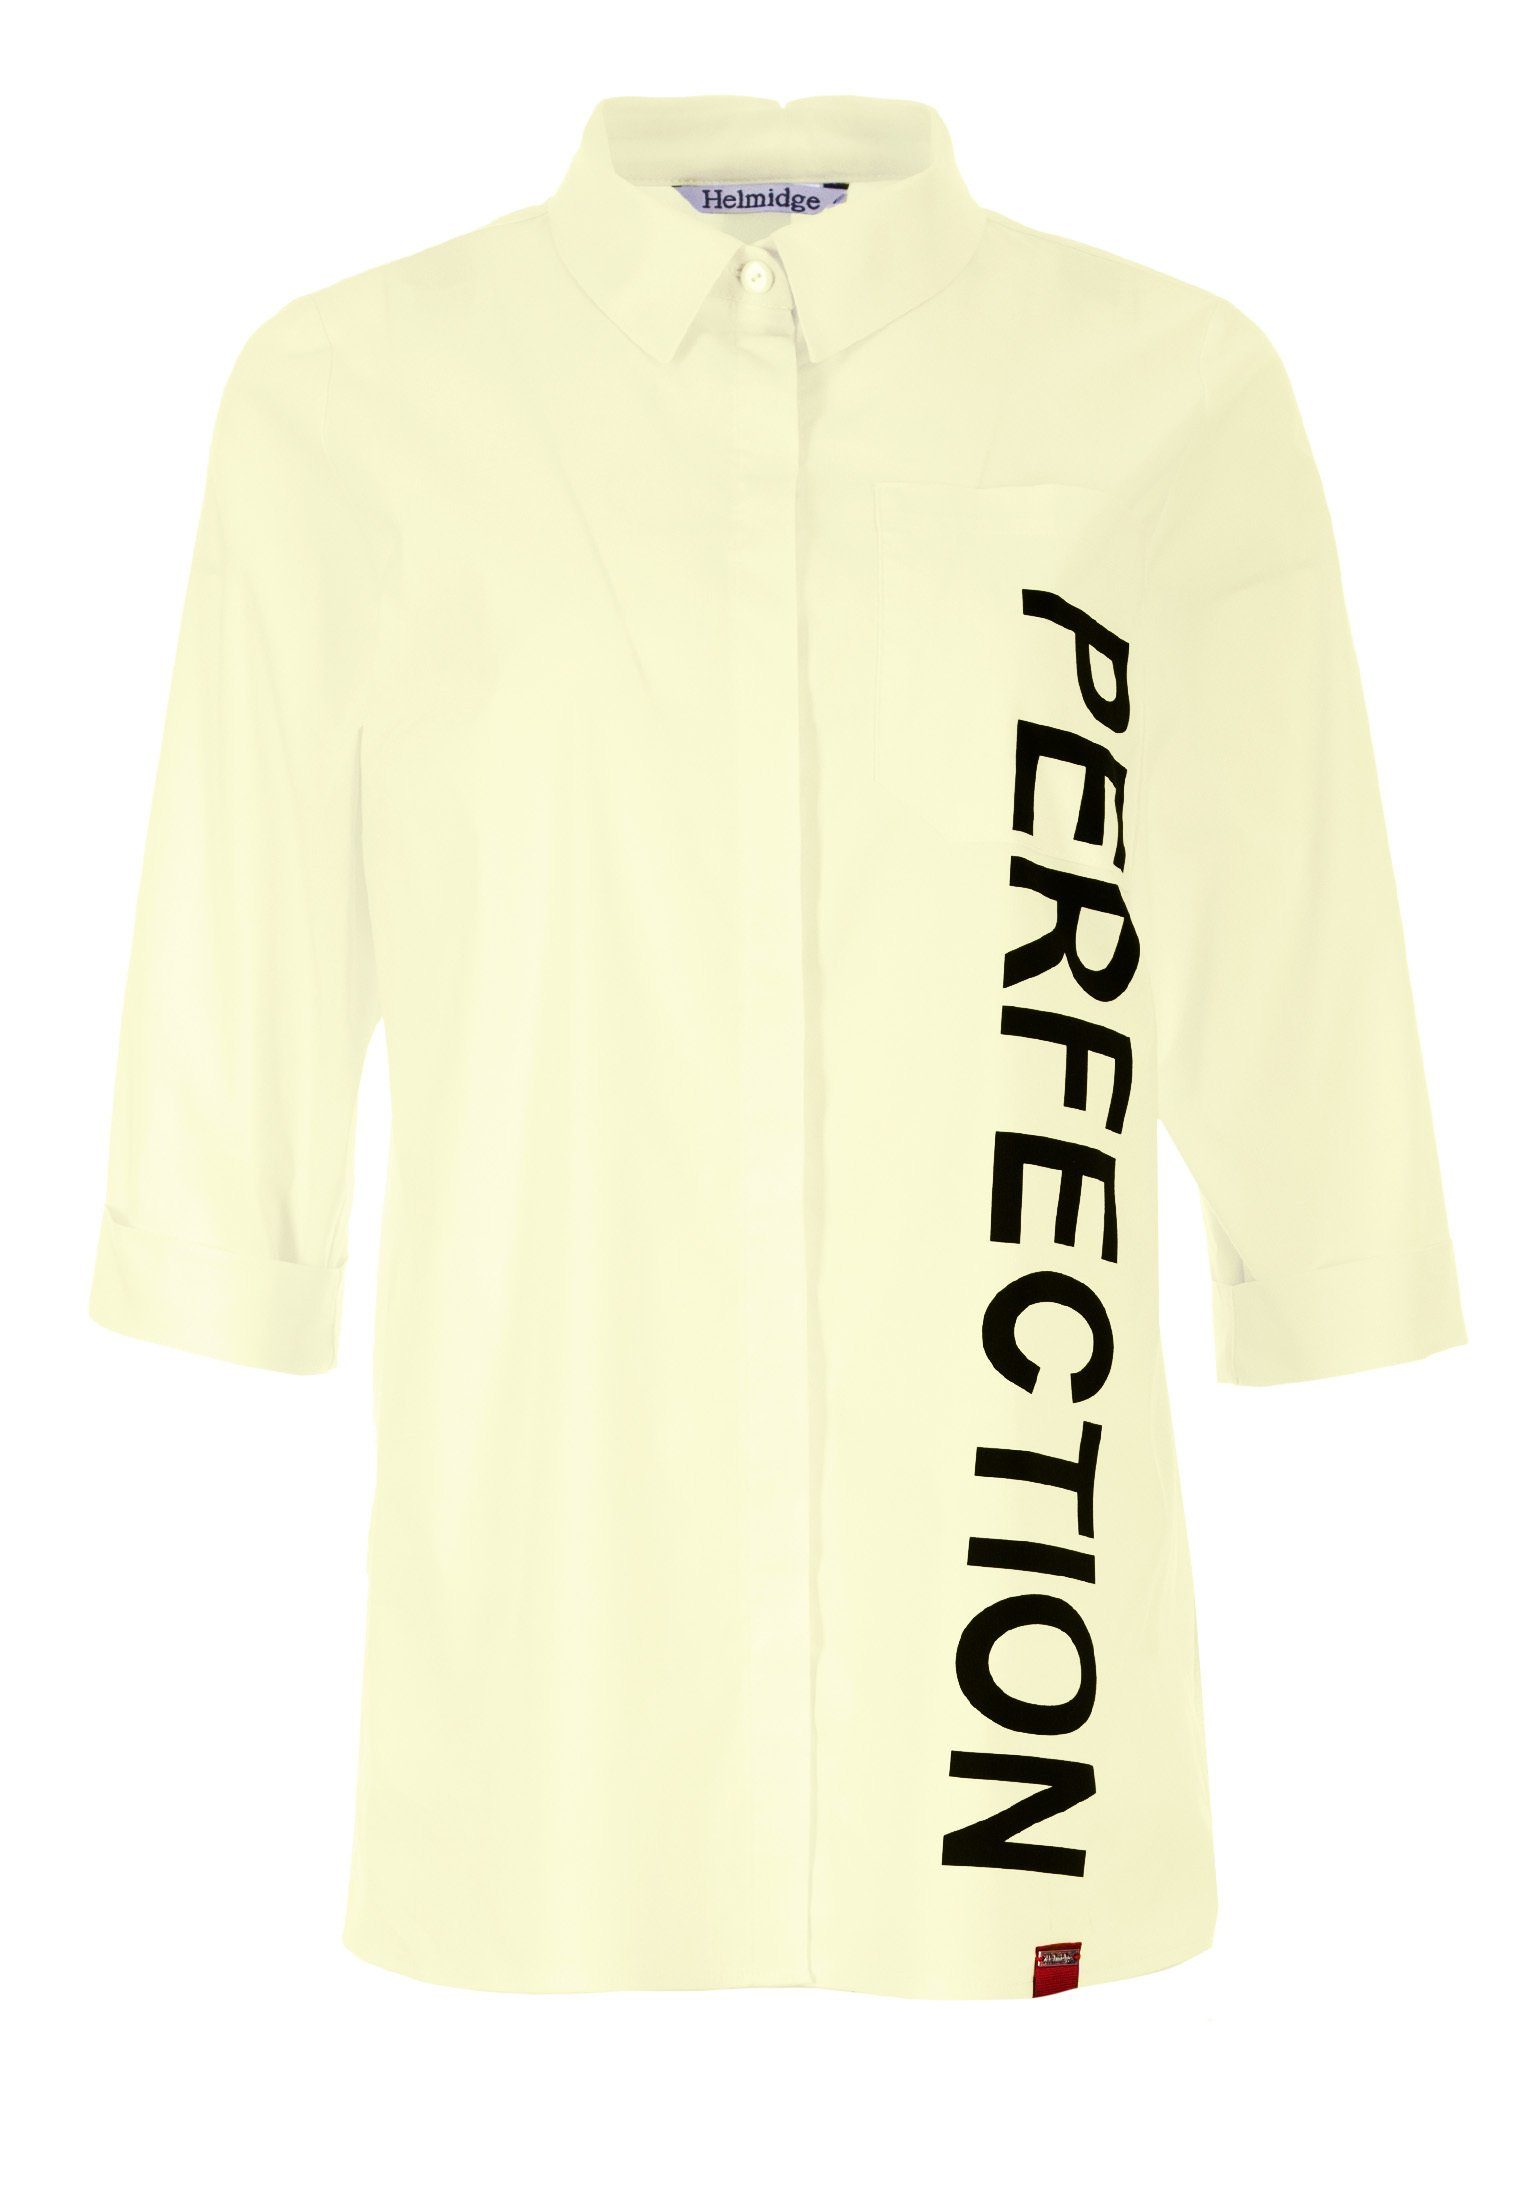 Print-Shirt zitrone HELMIDGE Longshirt